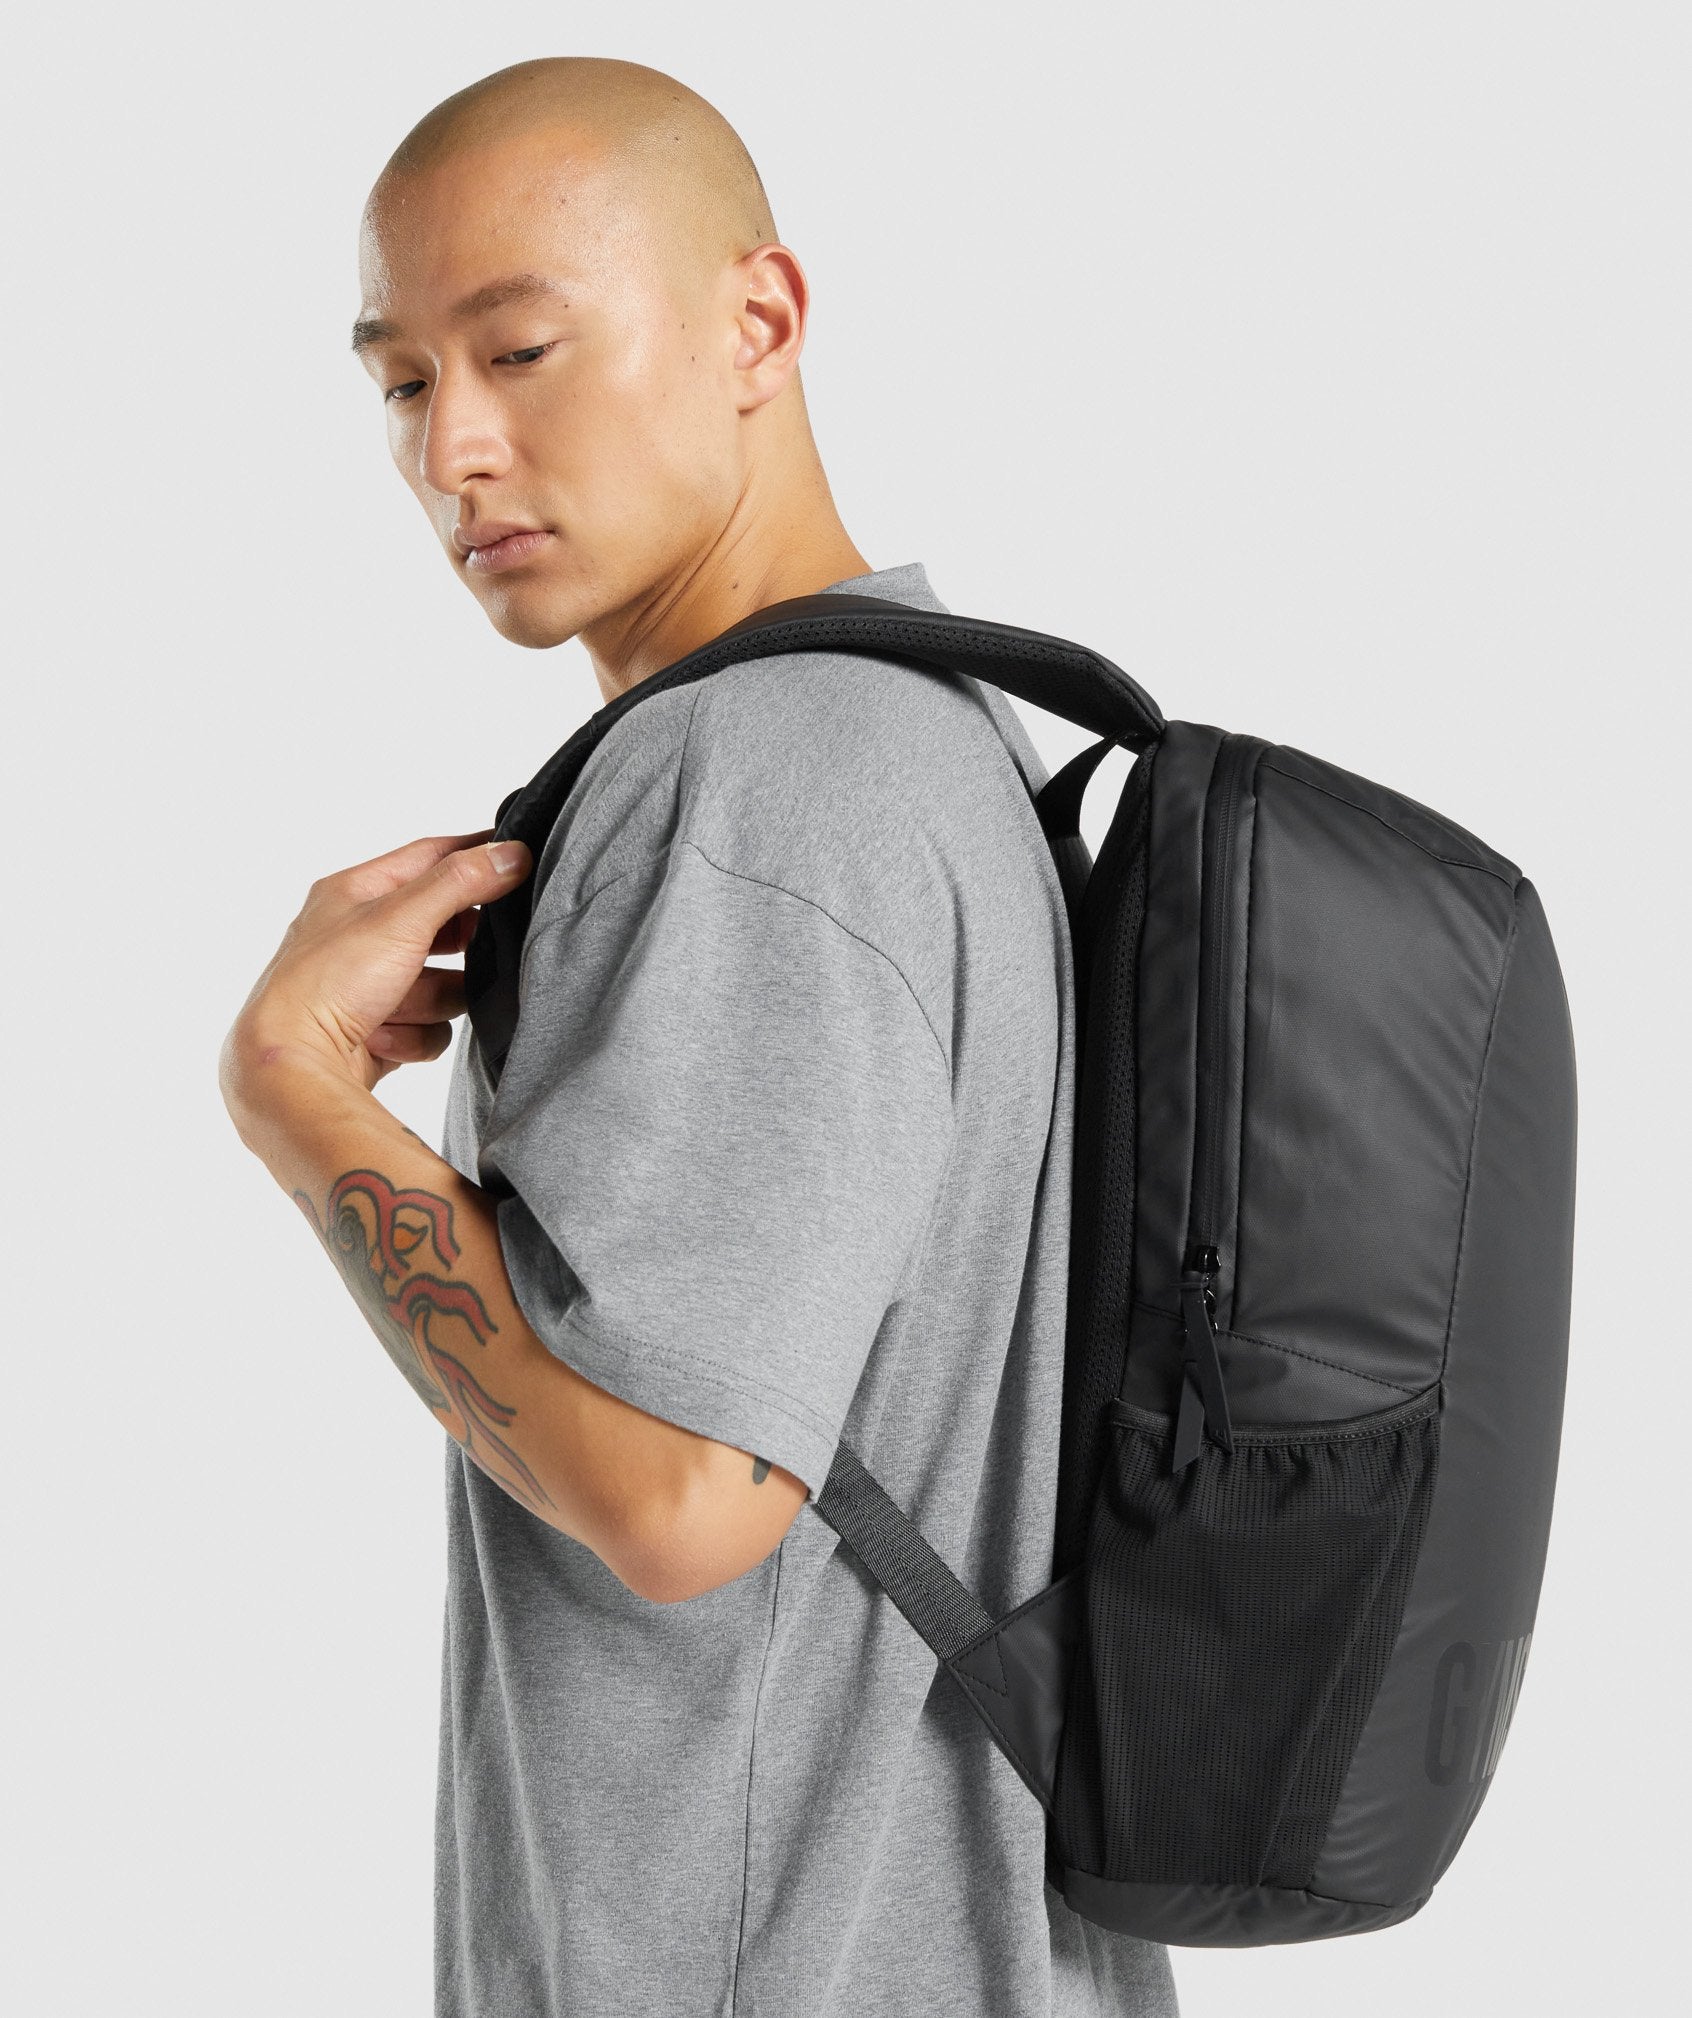 X-Series Backpack 0.1 in Black - view 4